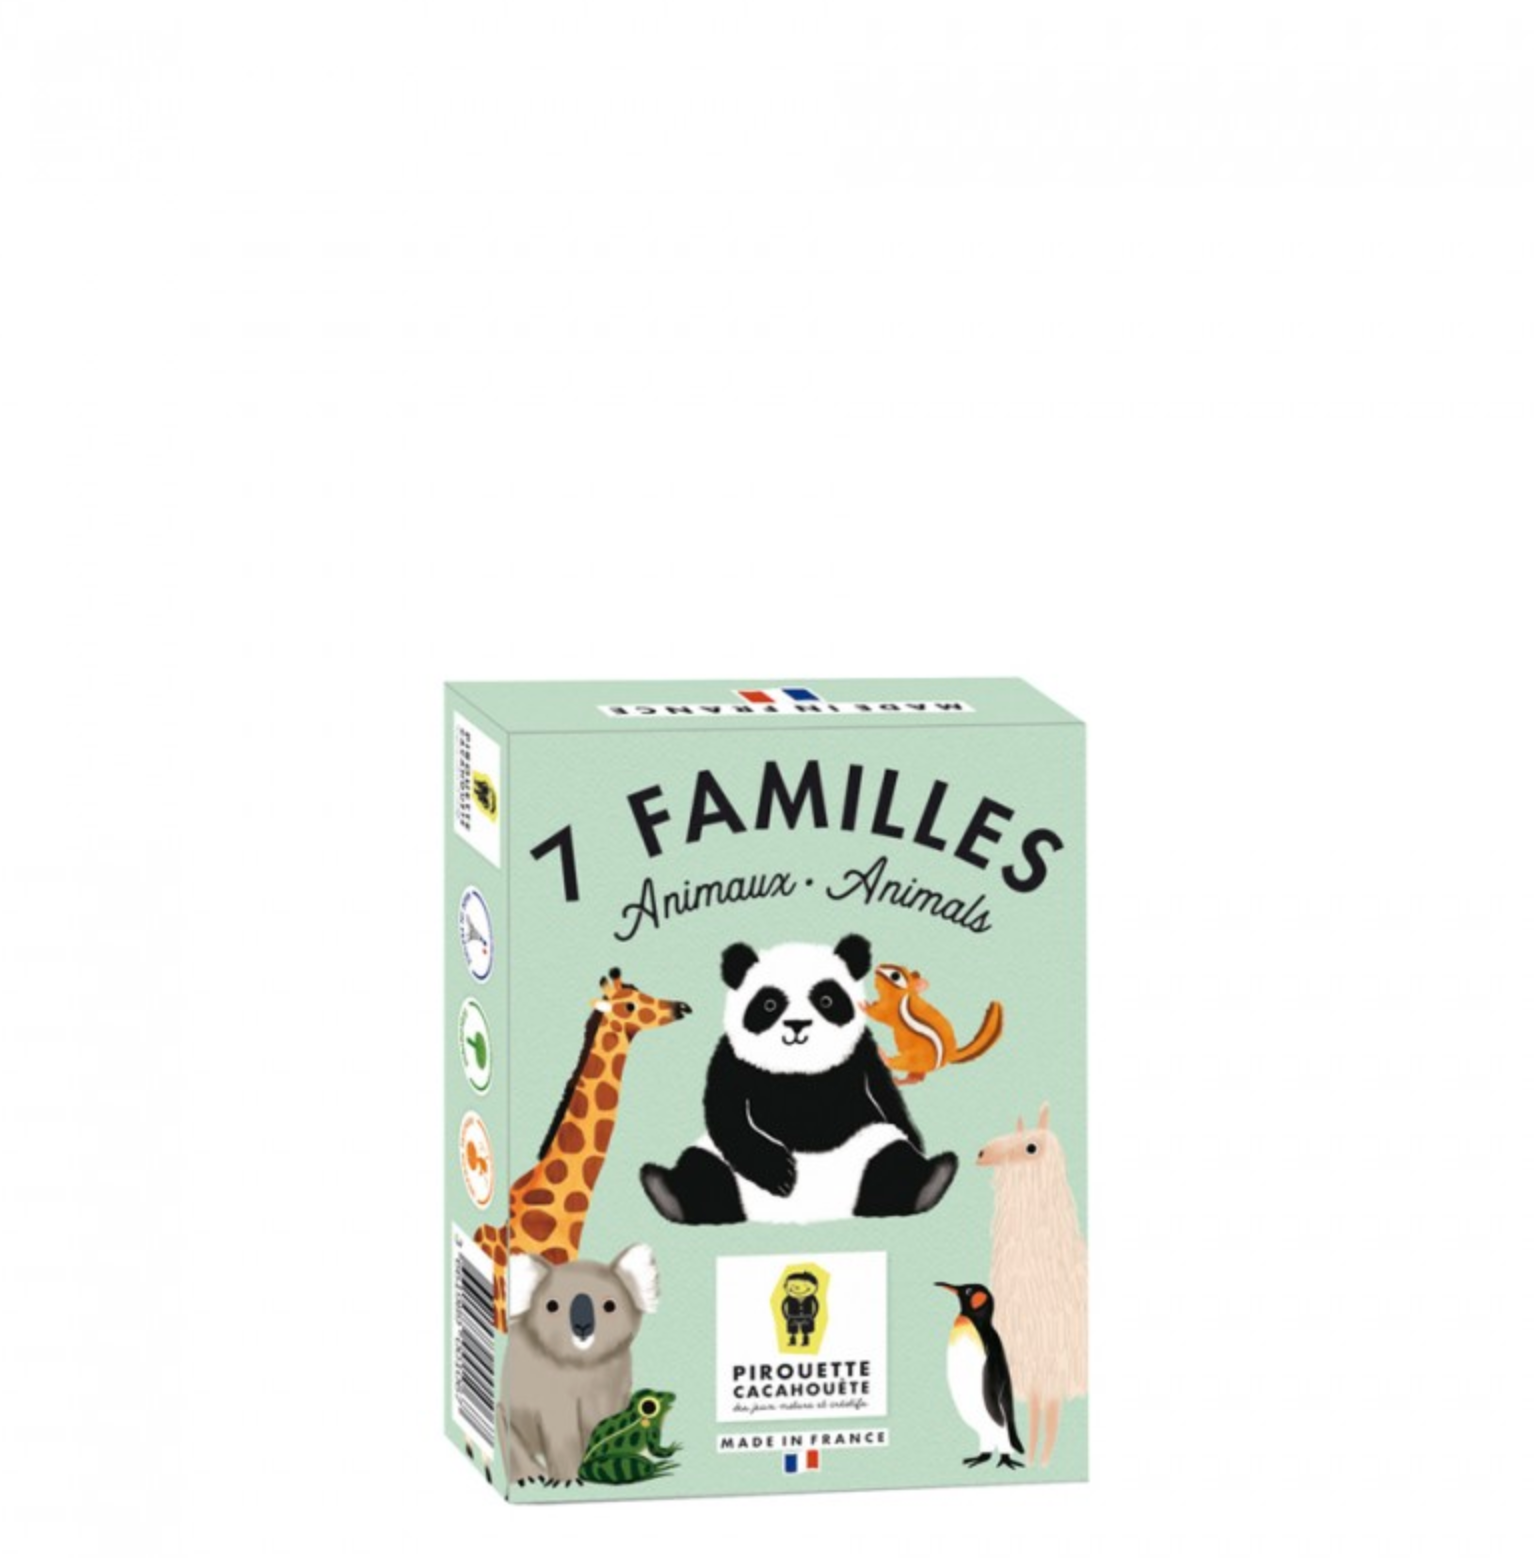 7 FAMILIES ANIMALS GAME / Επιτραπέζιο με Κάρτες 7 Οικογένειες Ζώων